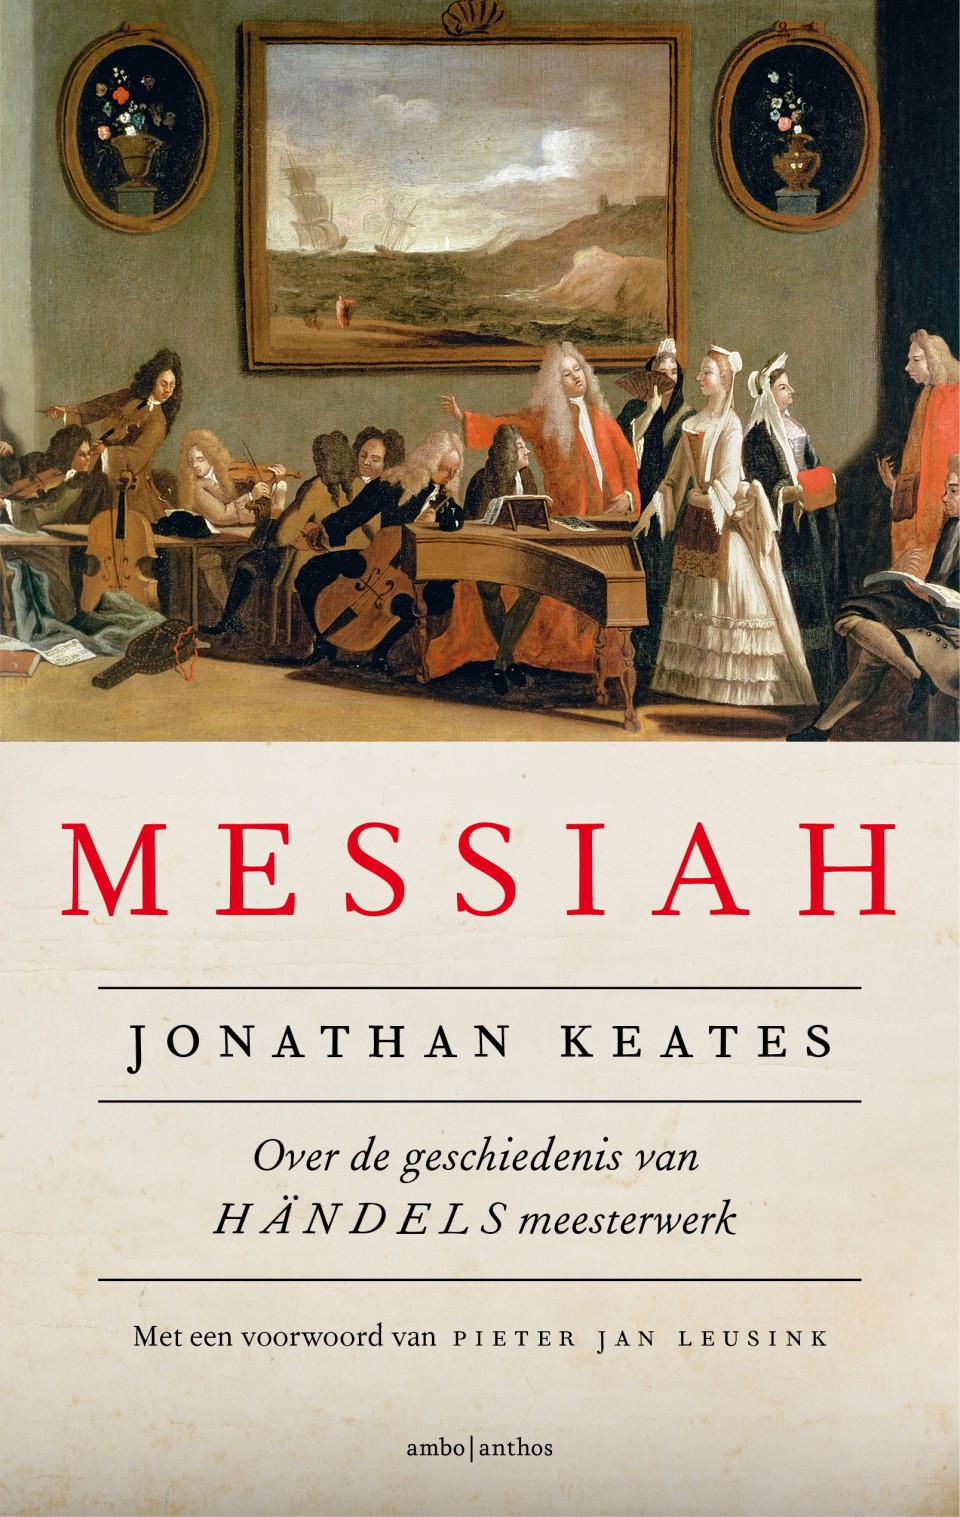 Jonathan Keates